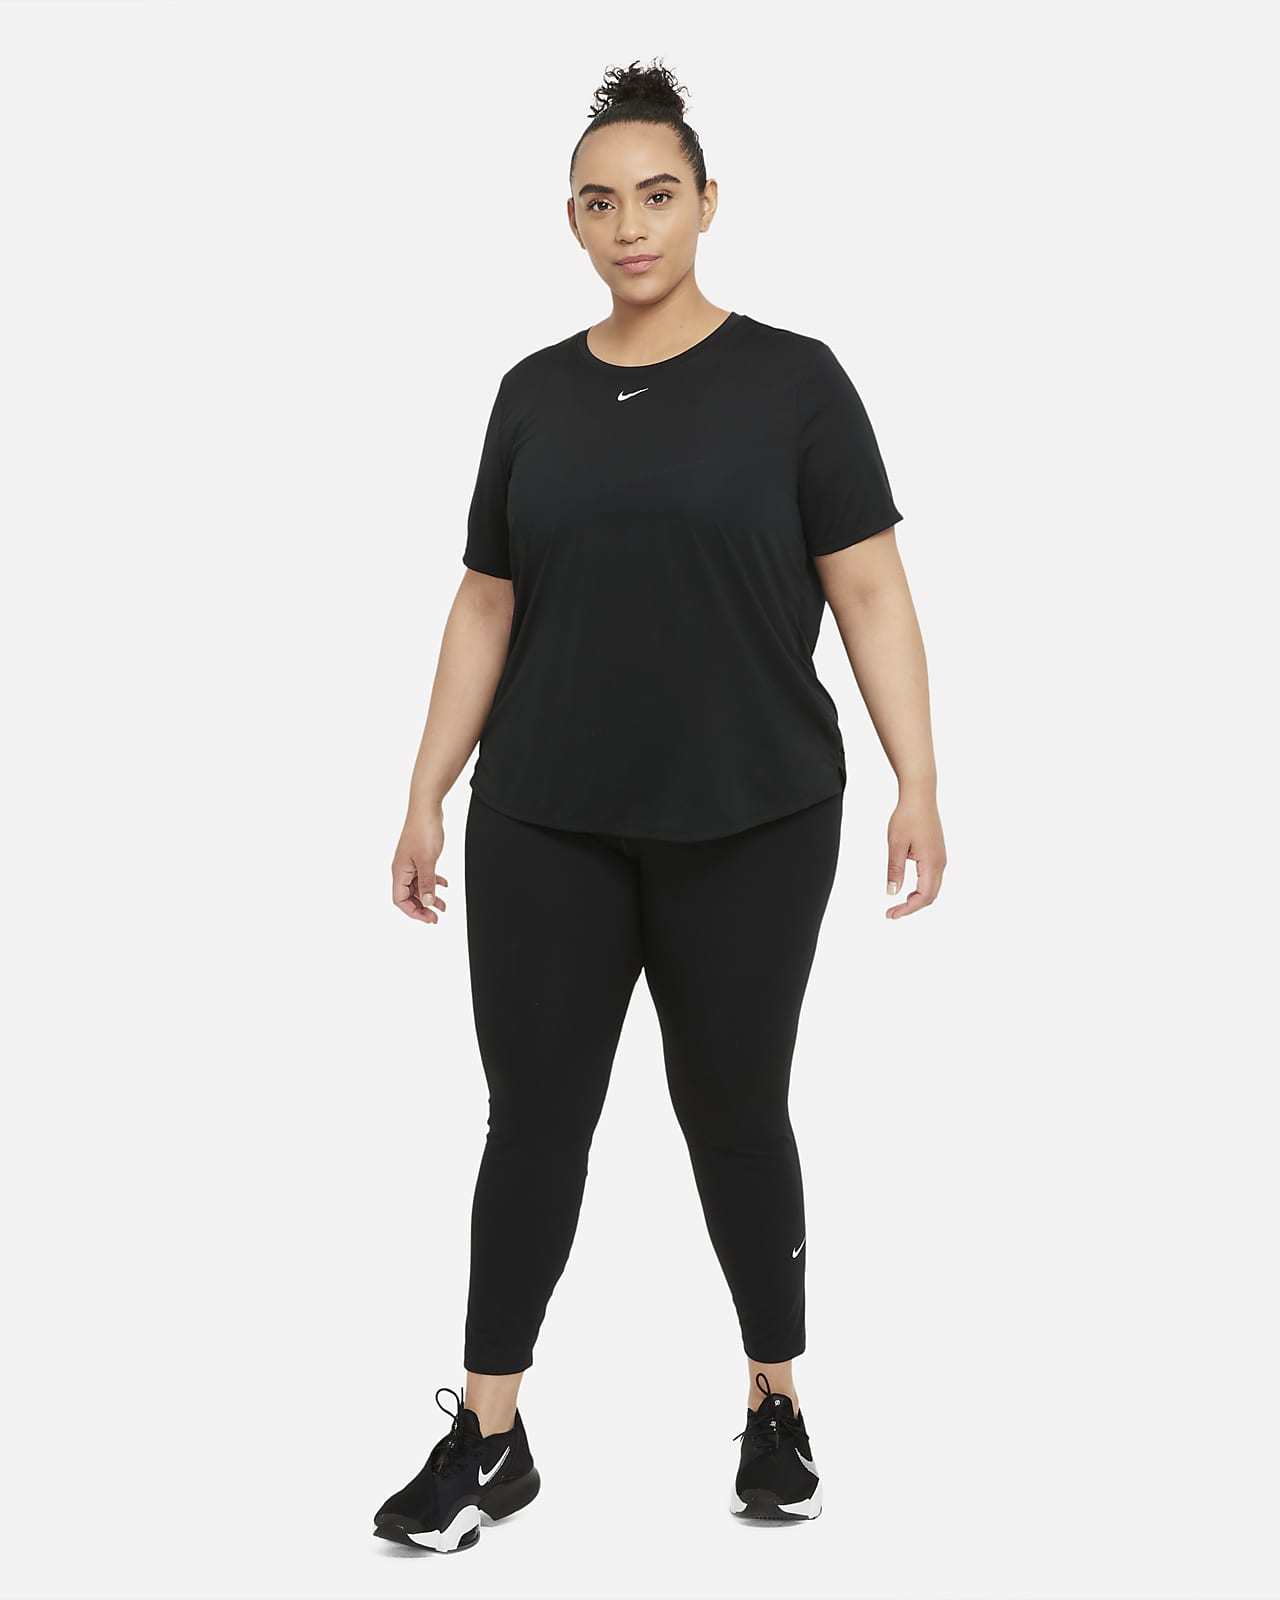 Nike Dri-FIT One Women's Standard-Fit Short-Sleeve Top (Plus Size). Nike SE